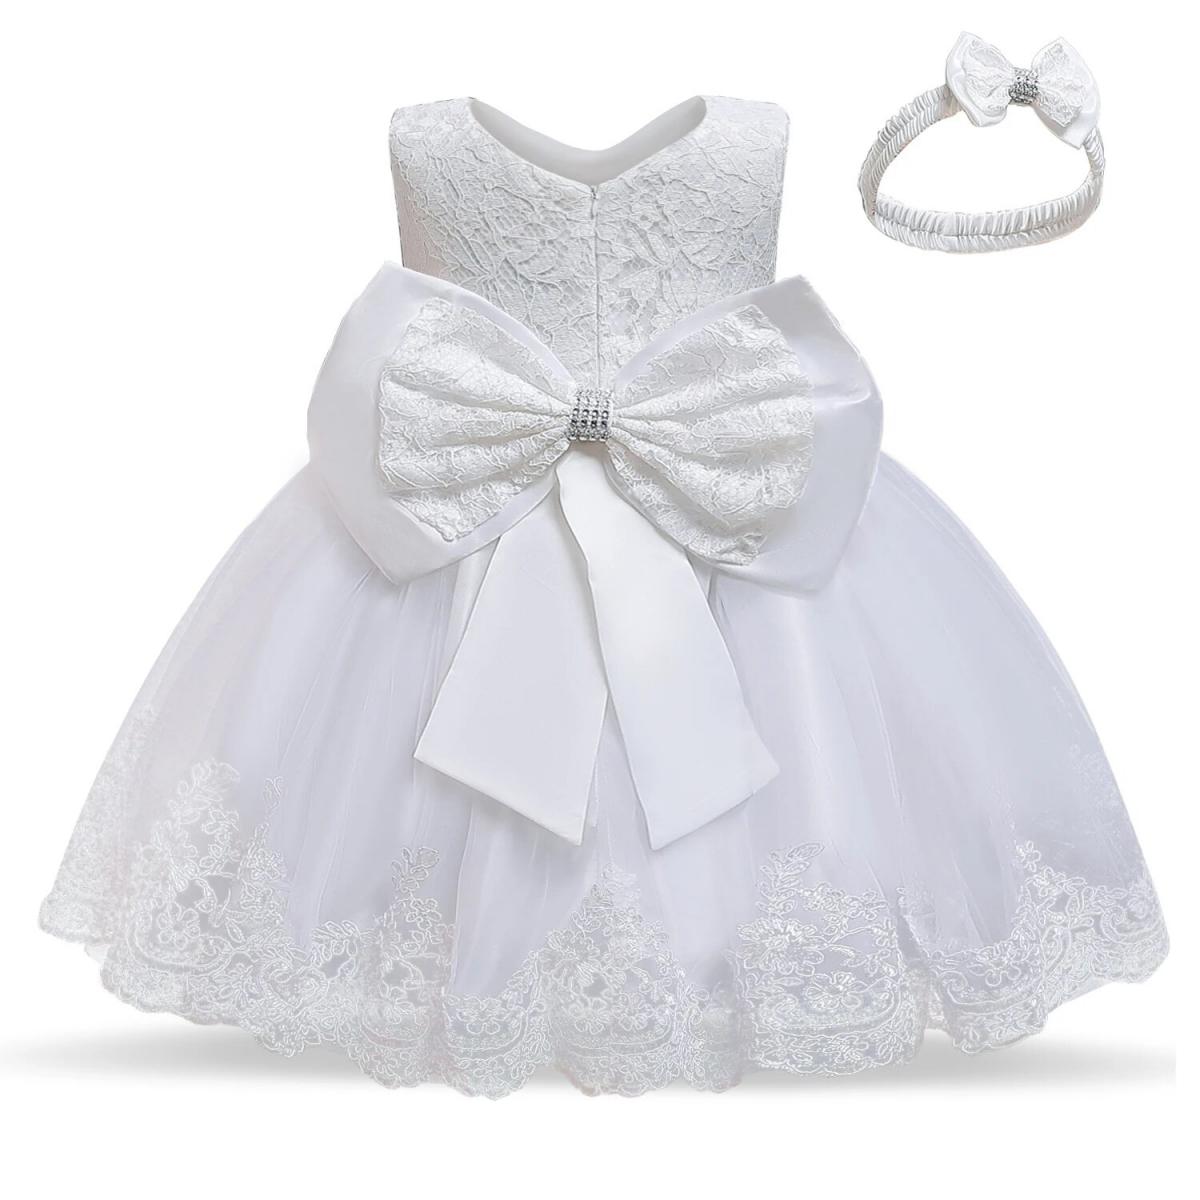 Vestido de novia para niña de 18 meses, vestido de bebé de 6 meses, vestido floral de encaje de 12 meses